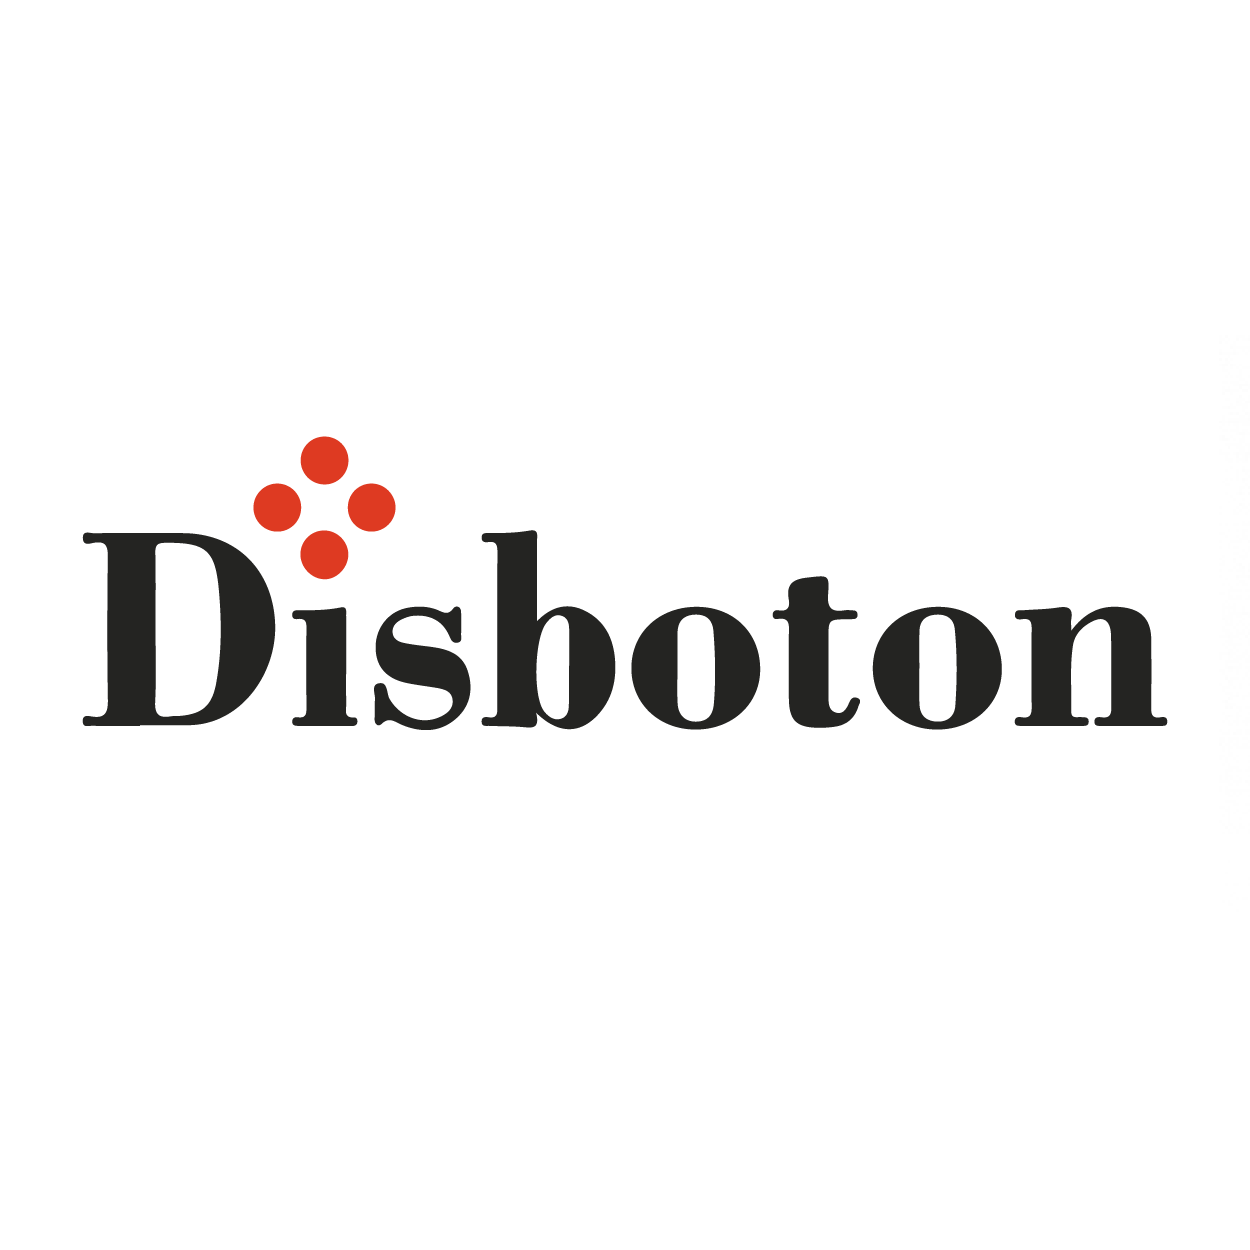 Disboton